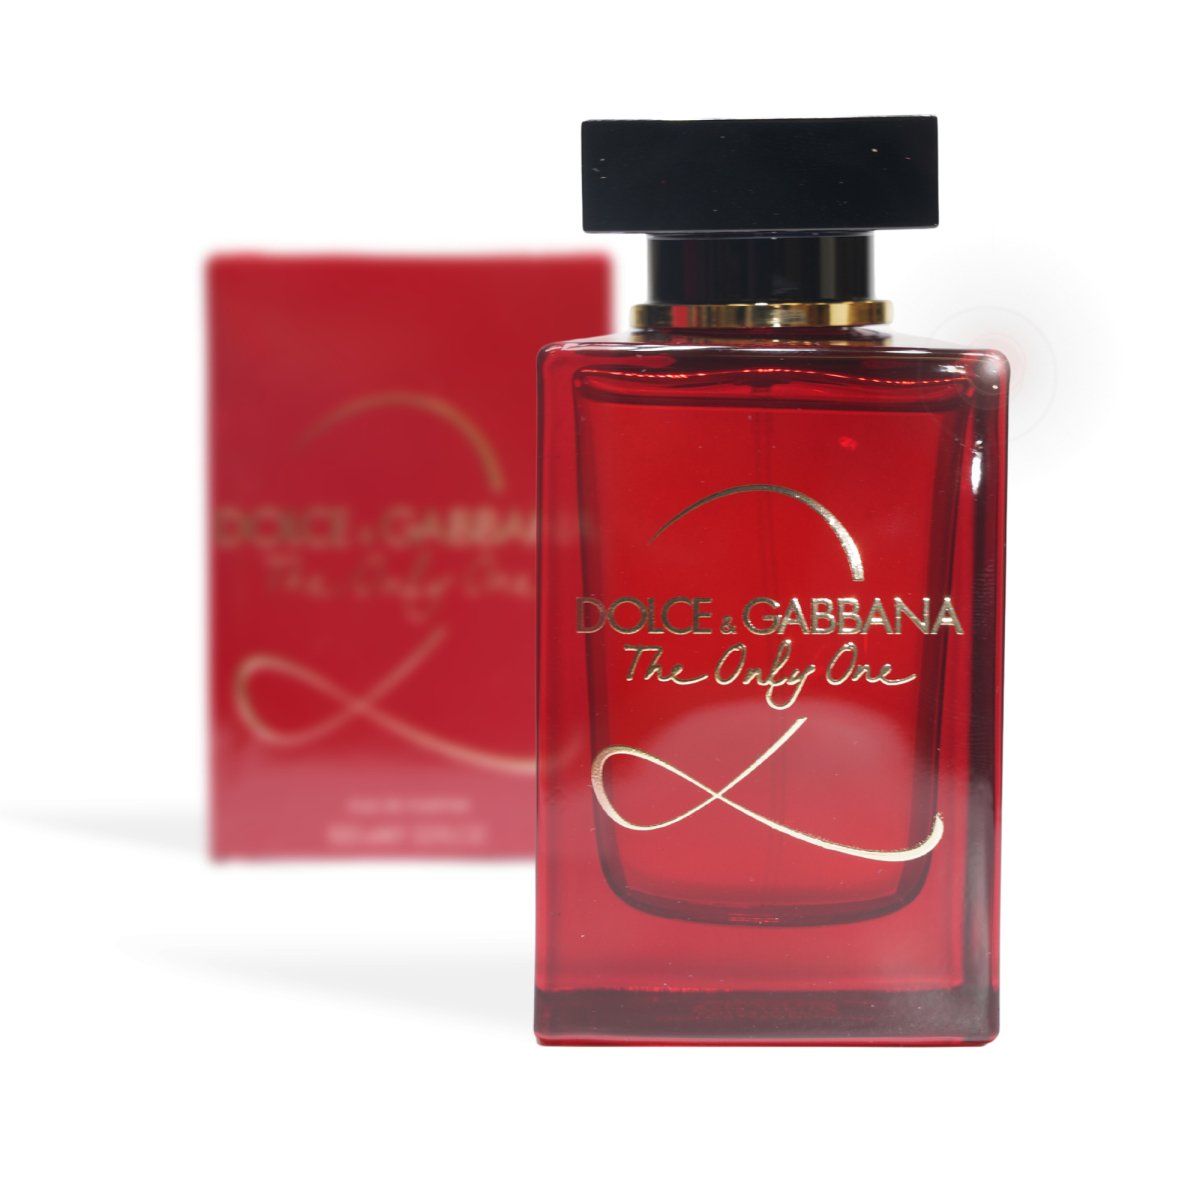 Dolce & Gabbana The Only One Eau De Parfum Spray - Dolce & Gabbana - Fragrance